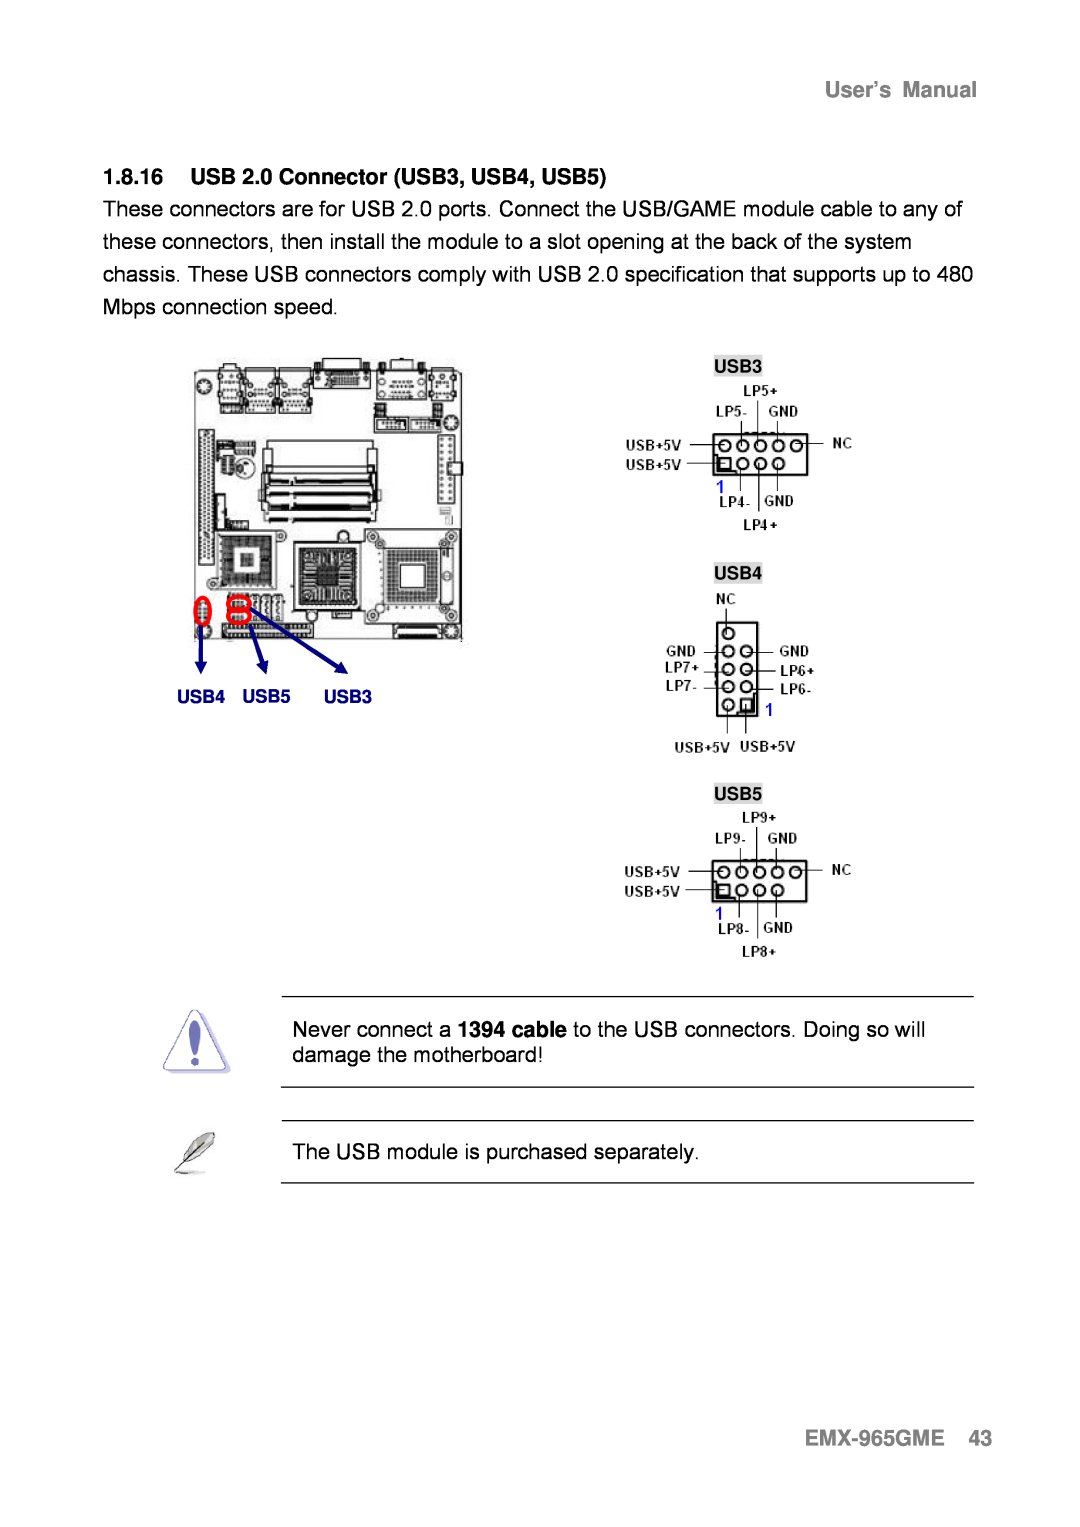 Intel user manual 1.8.16USB 2.0 Connector USB3, USB4, USB5, EMX-965GME43, User’s Manual 